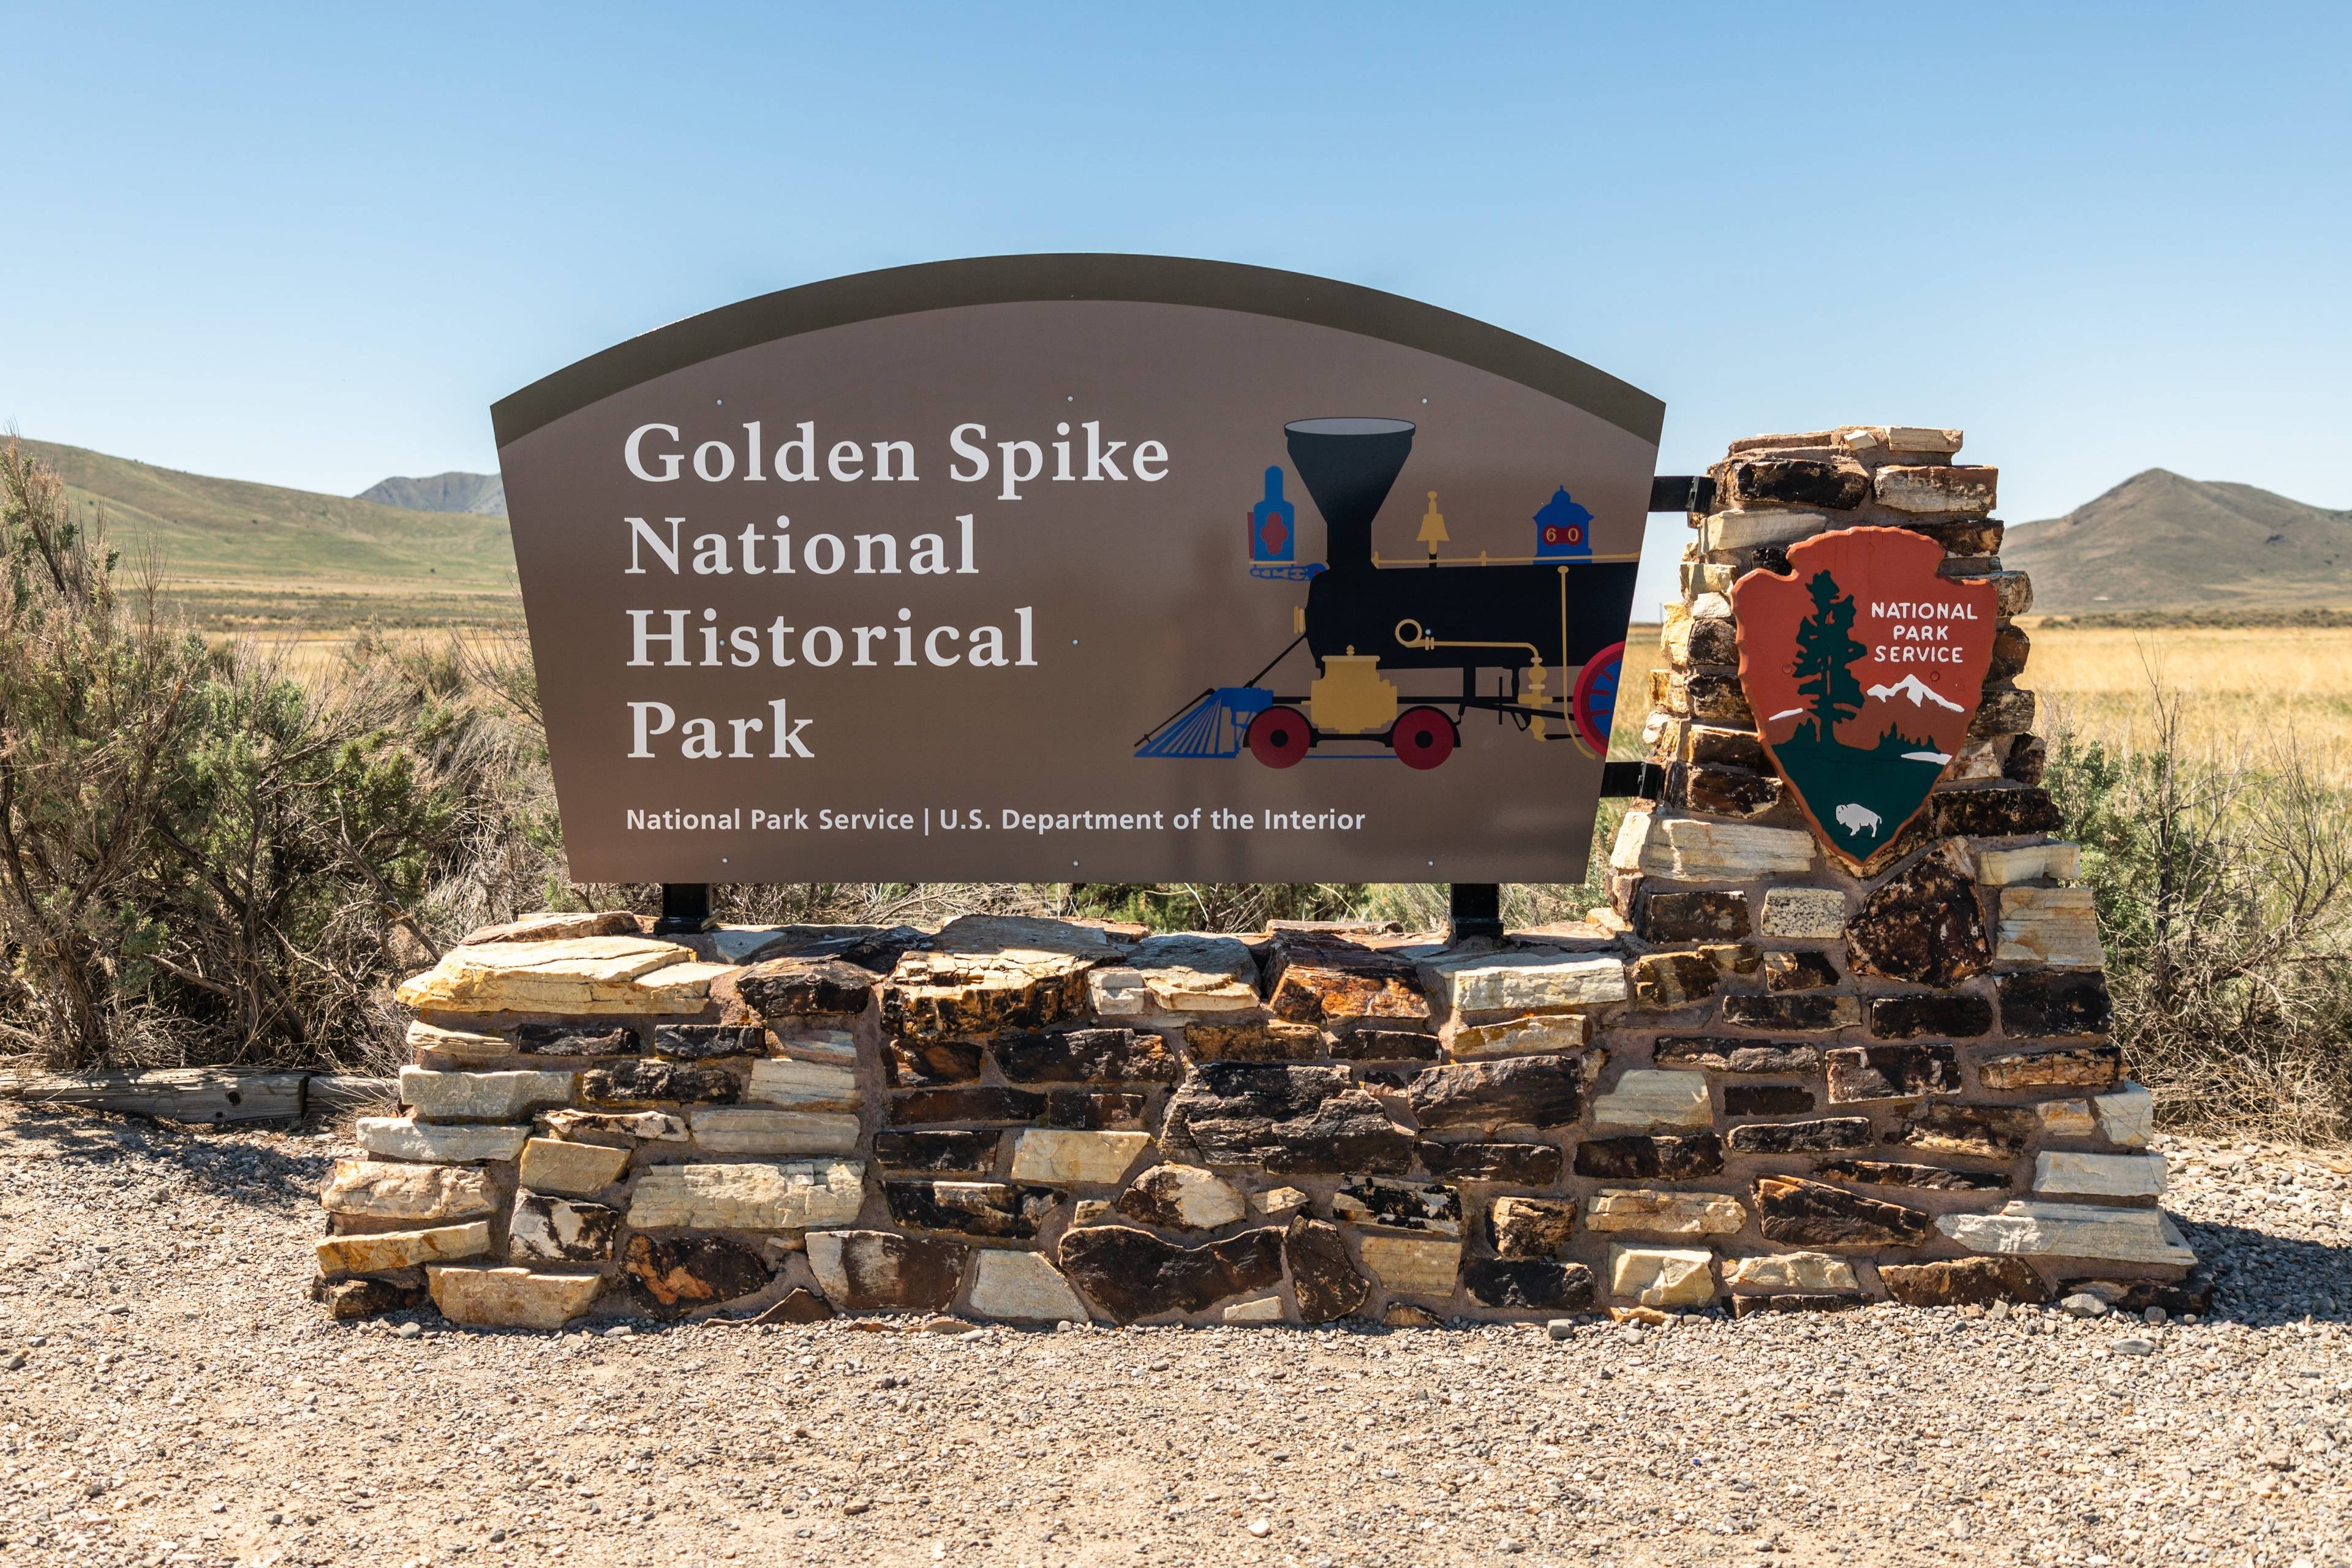 Golden Spike National Historical Park